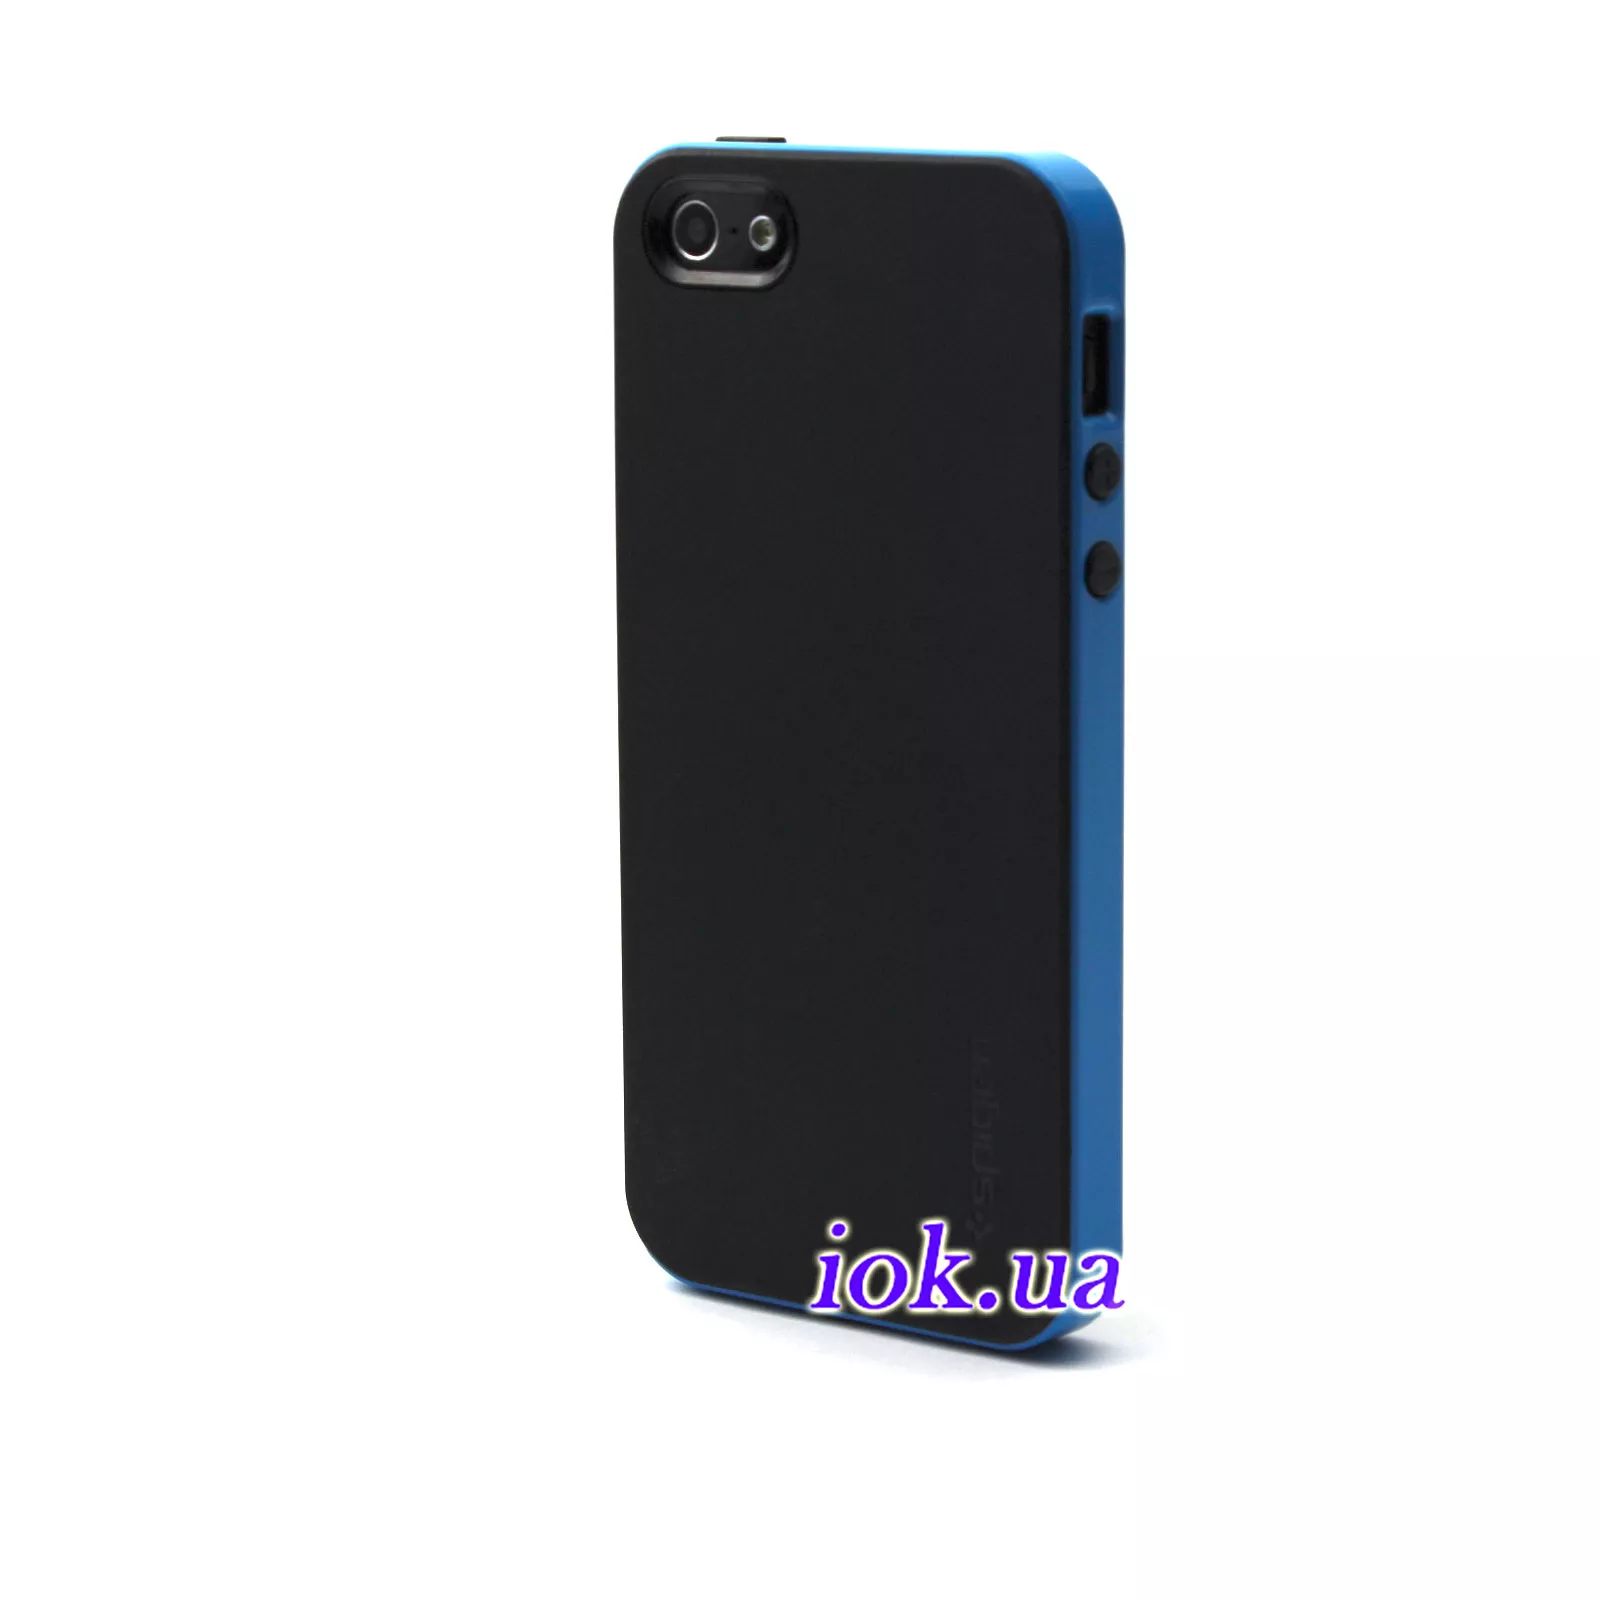 Чехол Spigen Neo Hybrid для iPhone 5/5S, синий